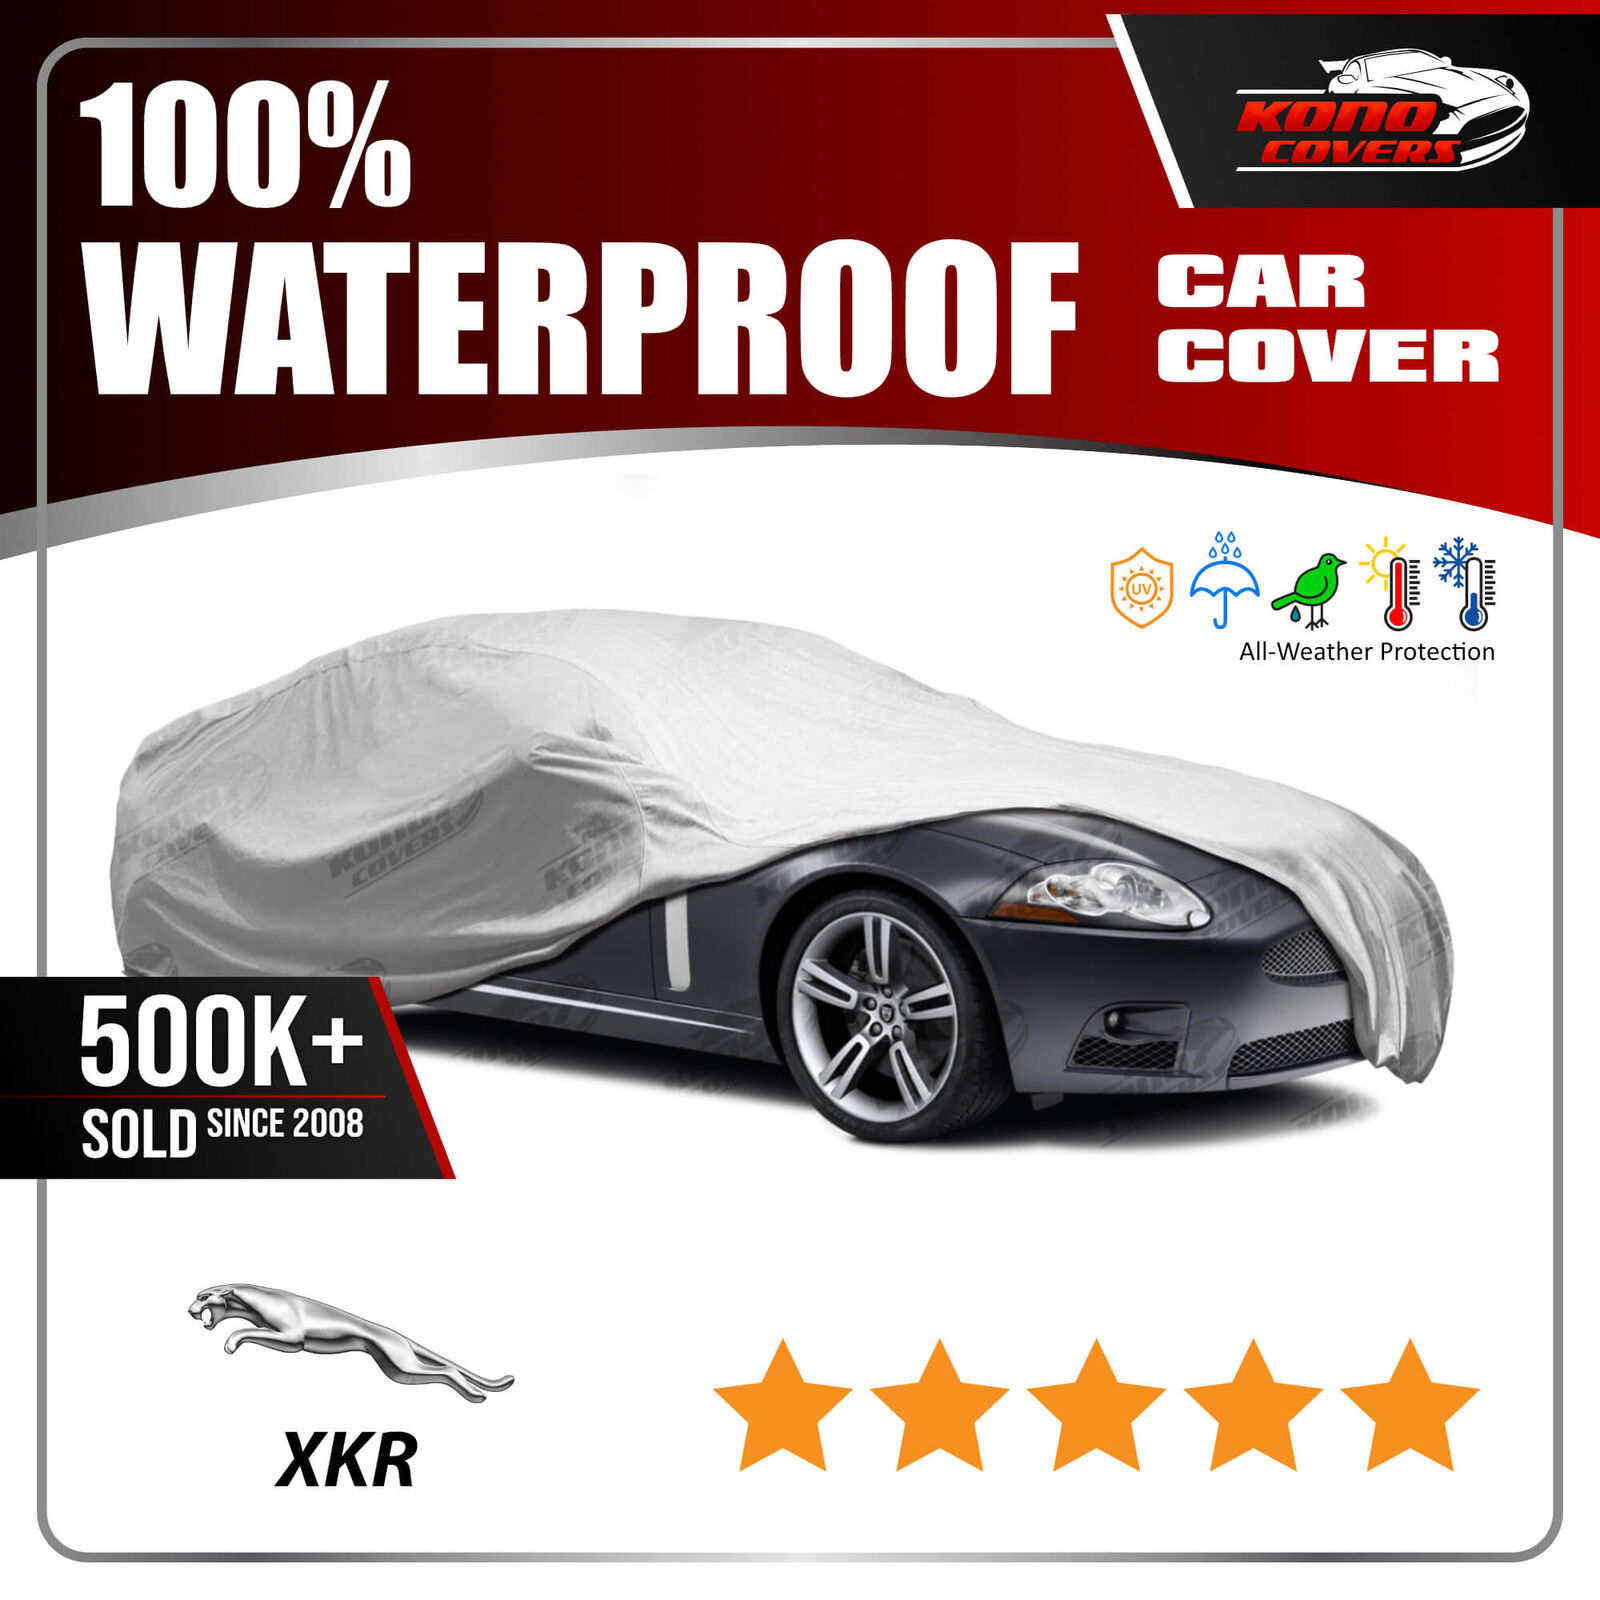 JAGUAR XK8, XKR 1997-2006 CAR COVER - 100% Waterproof 100% Breathable